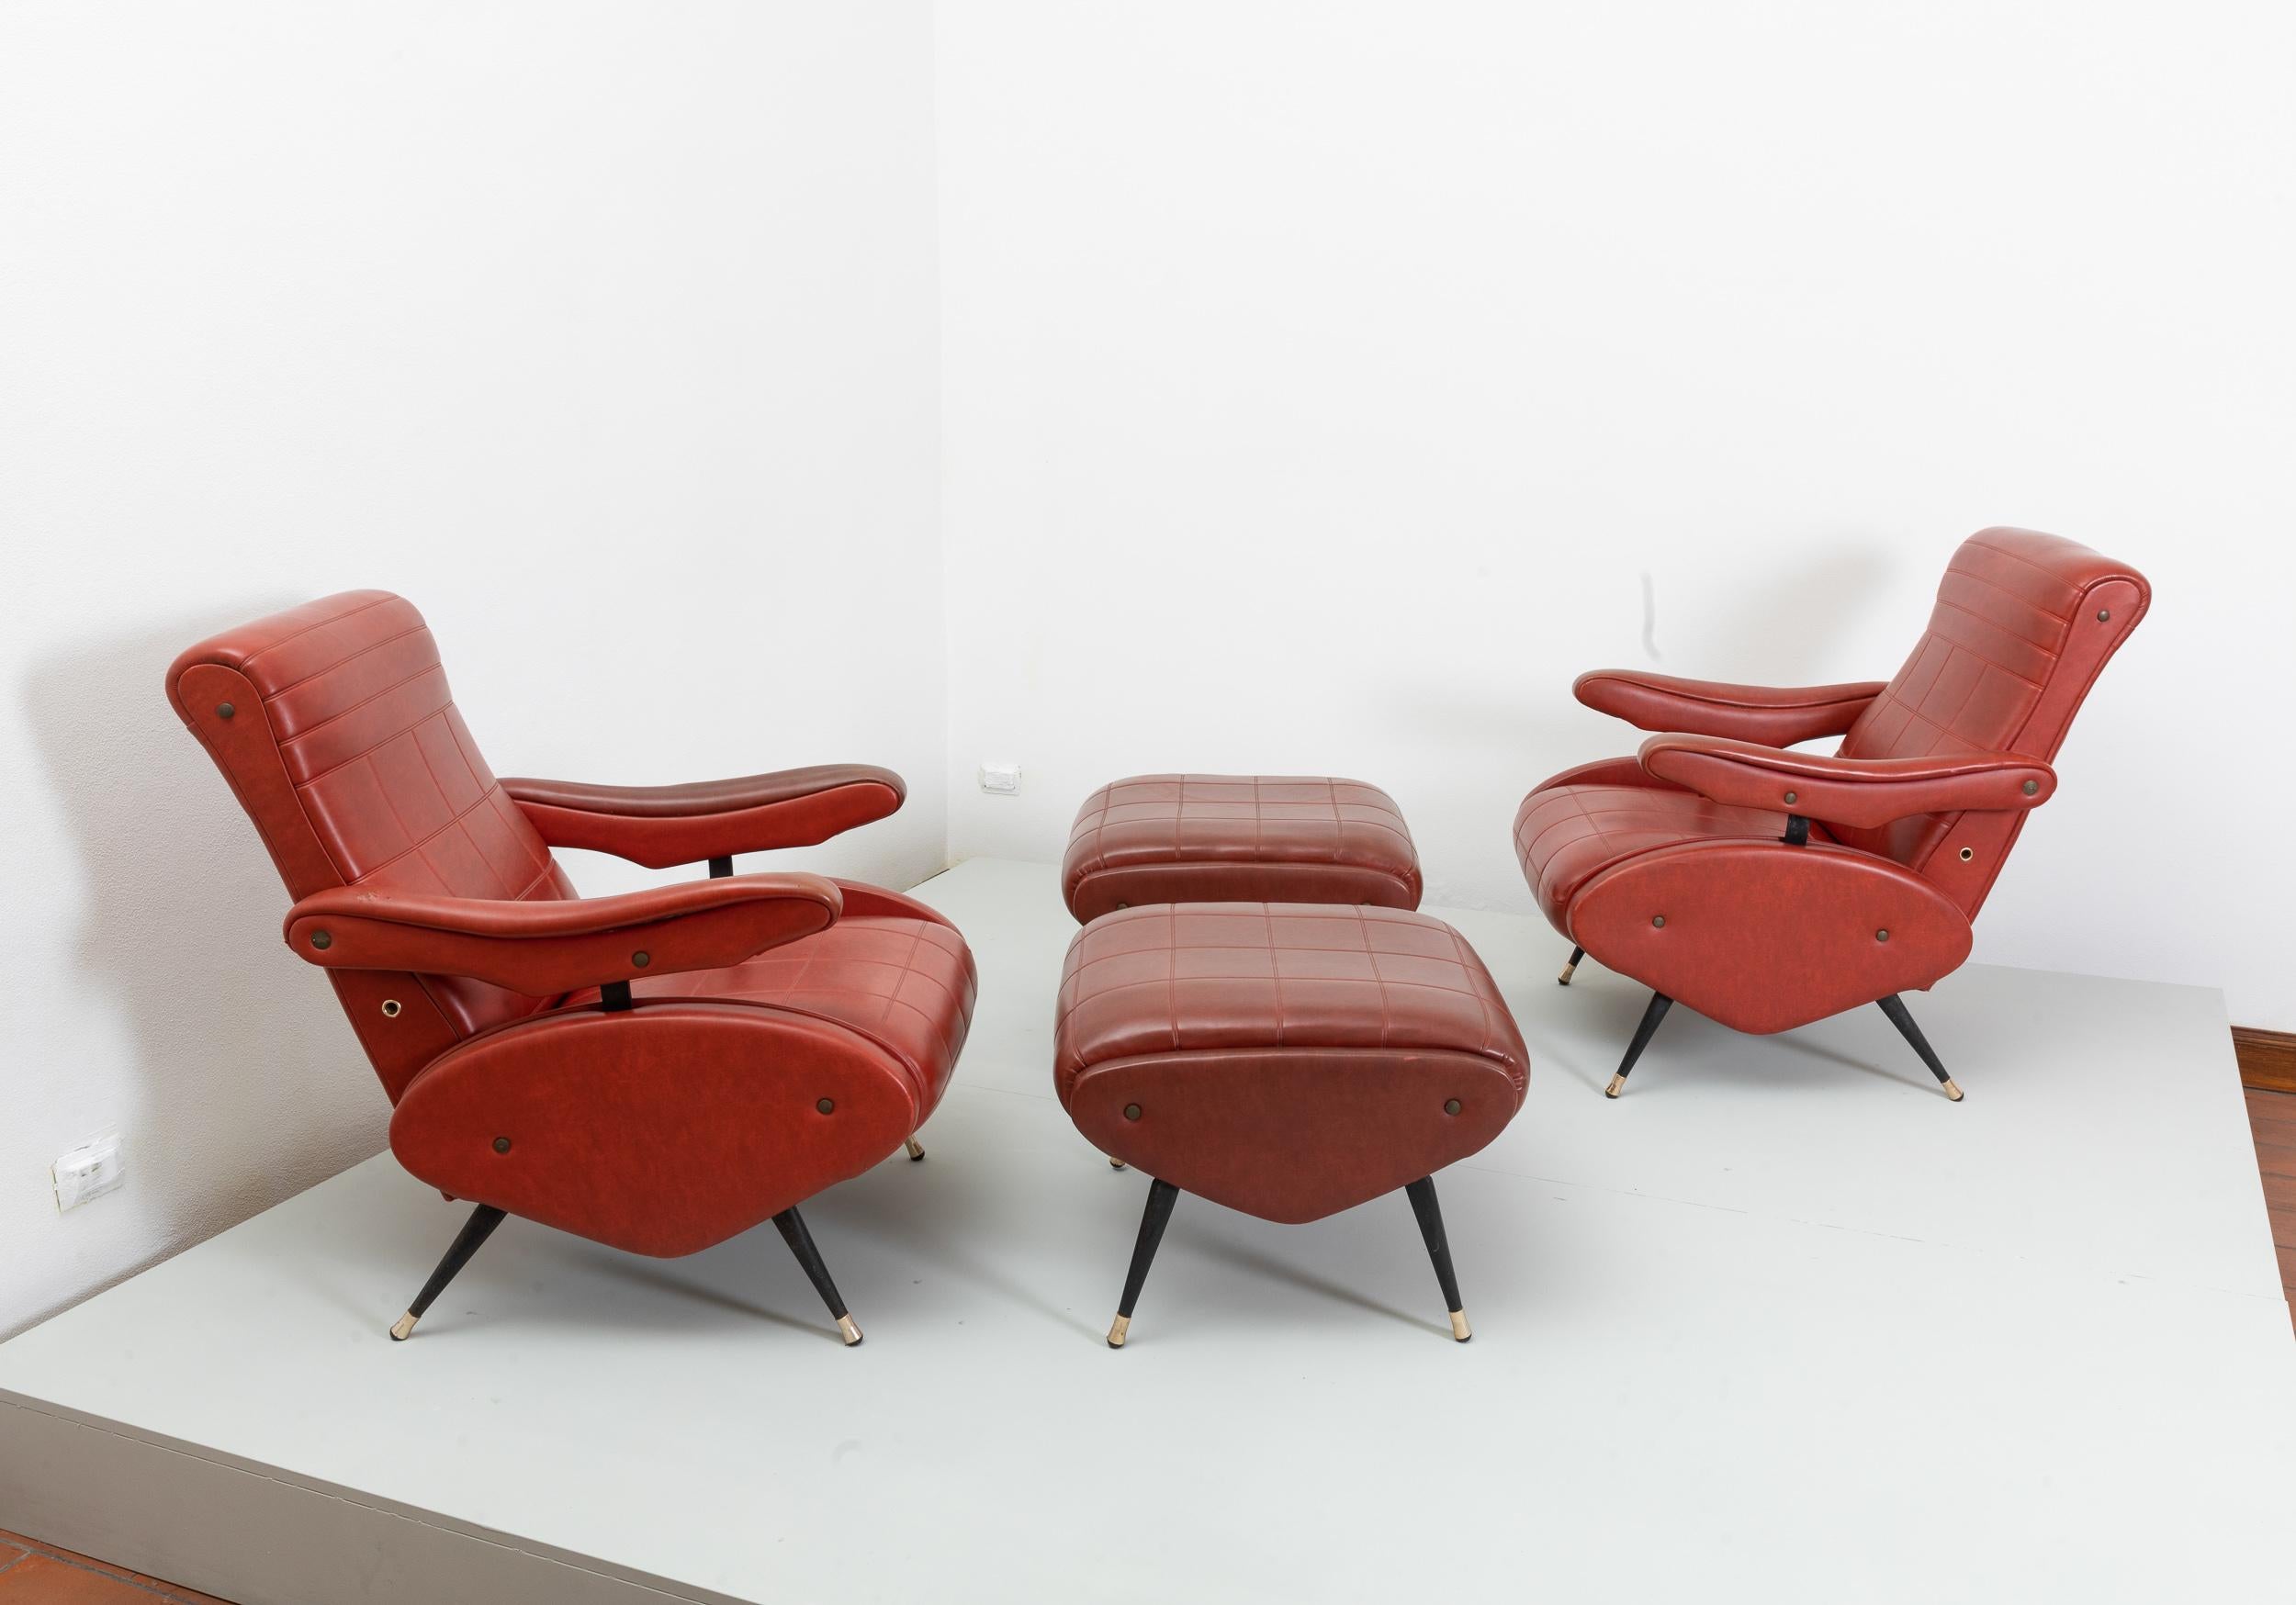 Nello Pini Prod. Novarredo c. 1950-1960 Two reclining armchairs and two pouffs 2